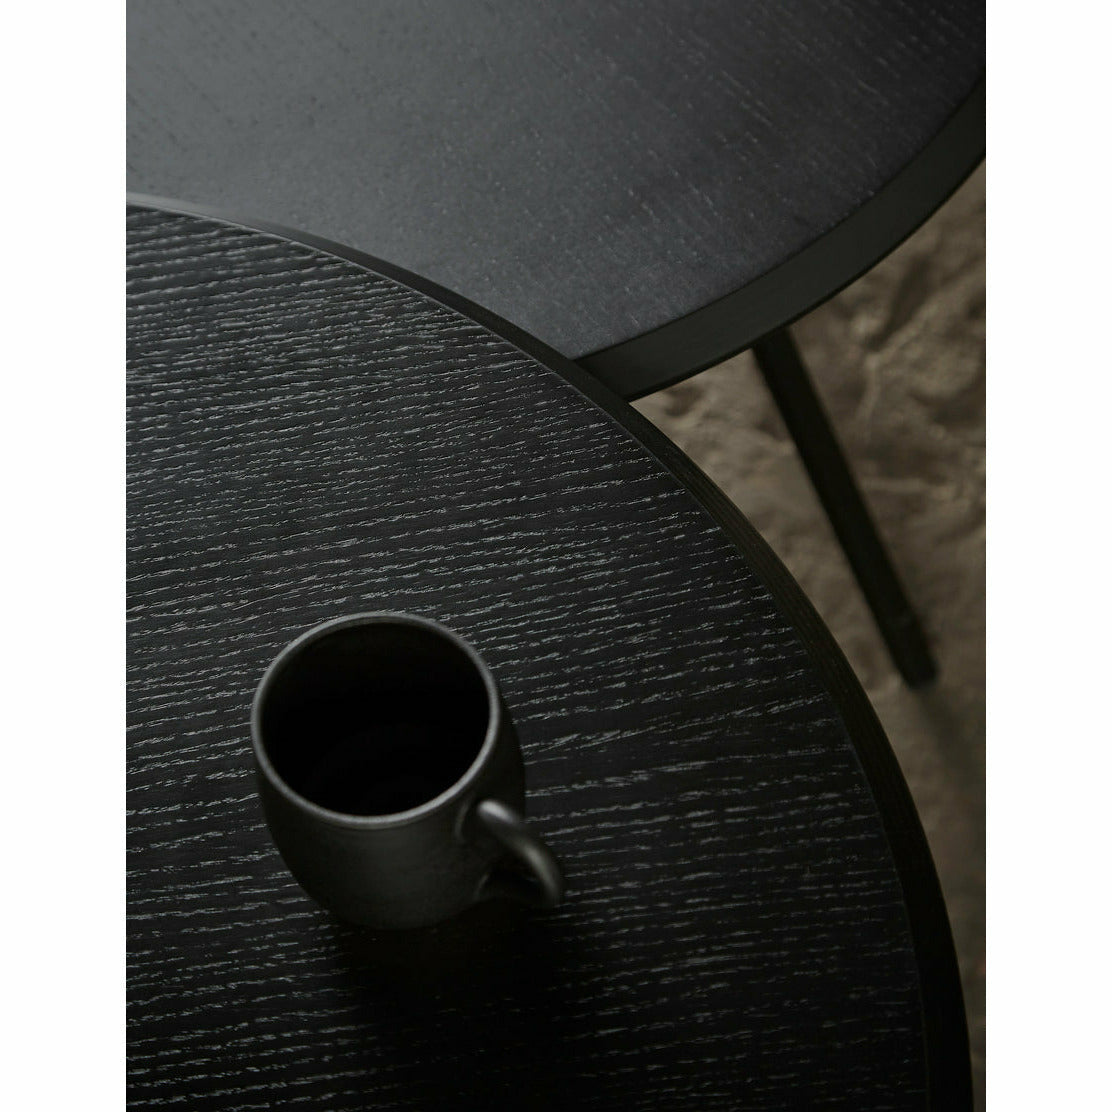 Woud - Mesa de café Soround - cinza preta (Ø60xh49)